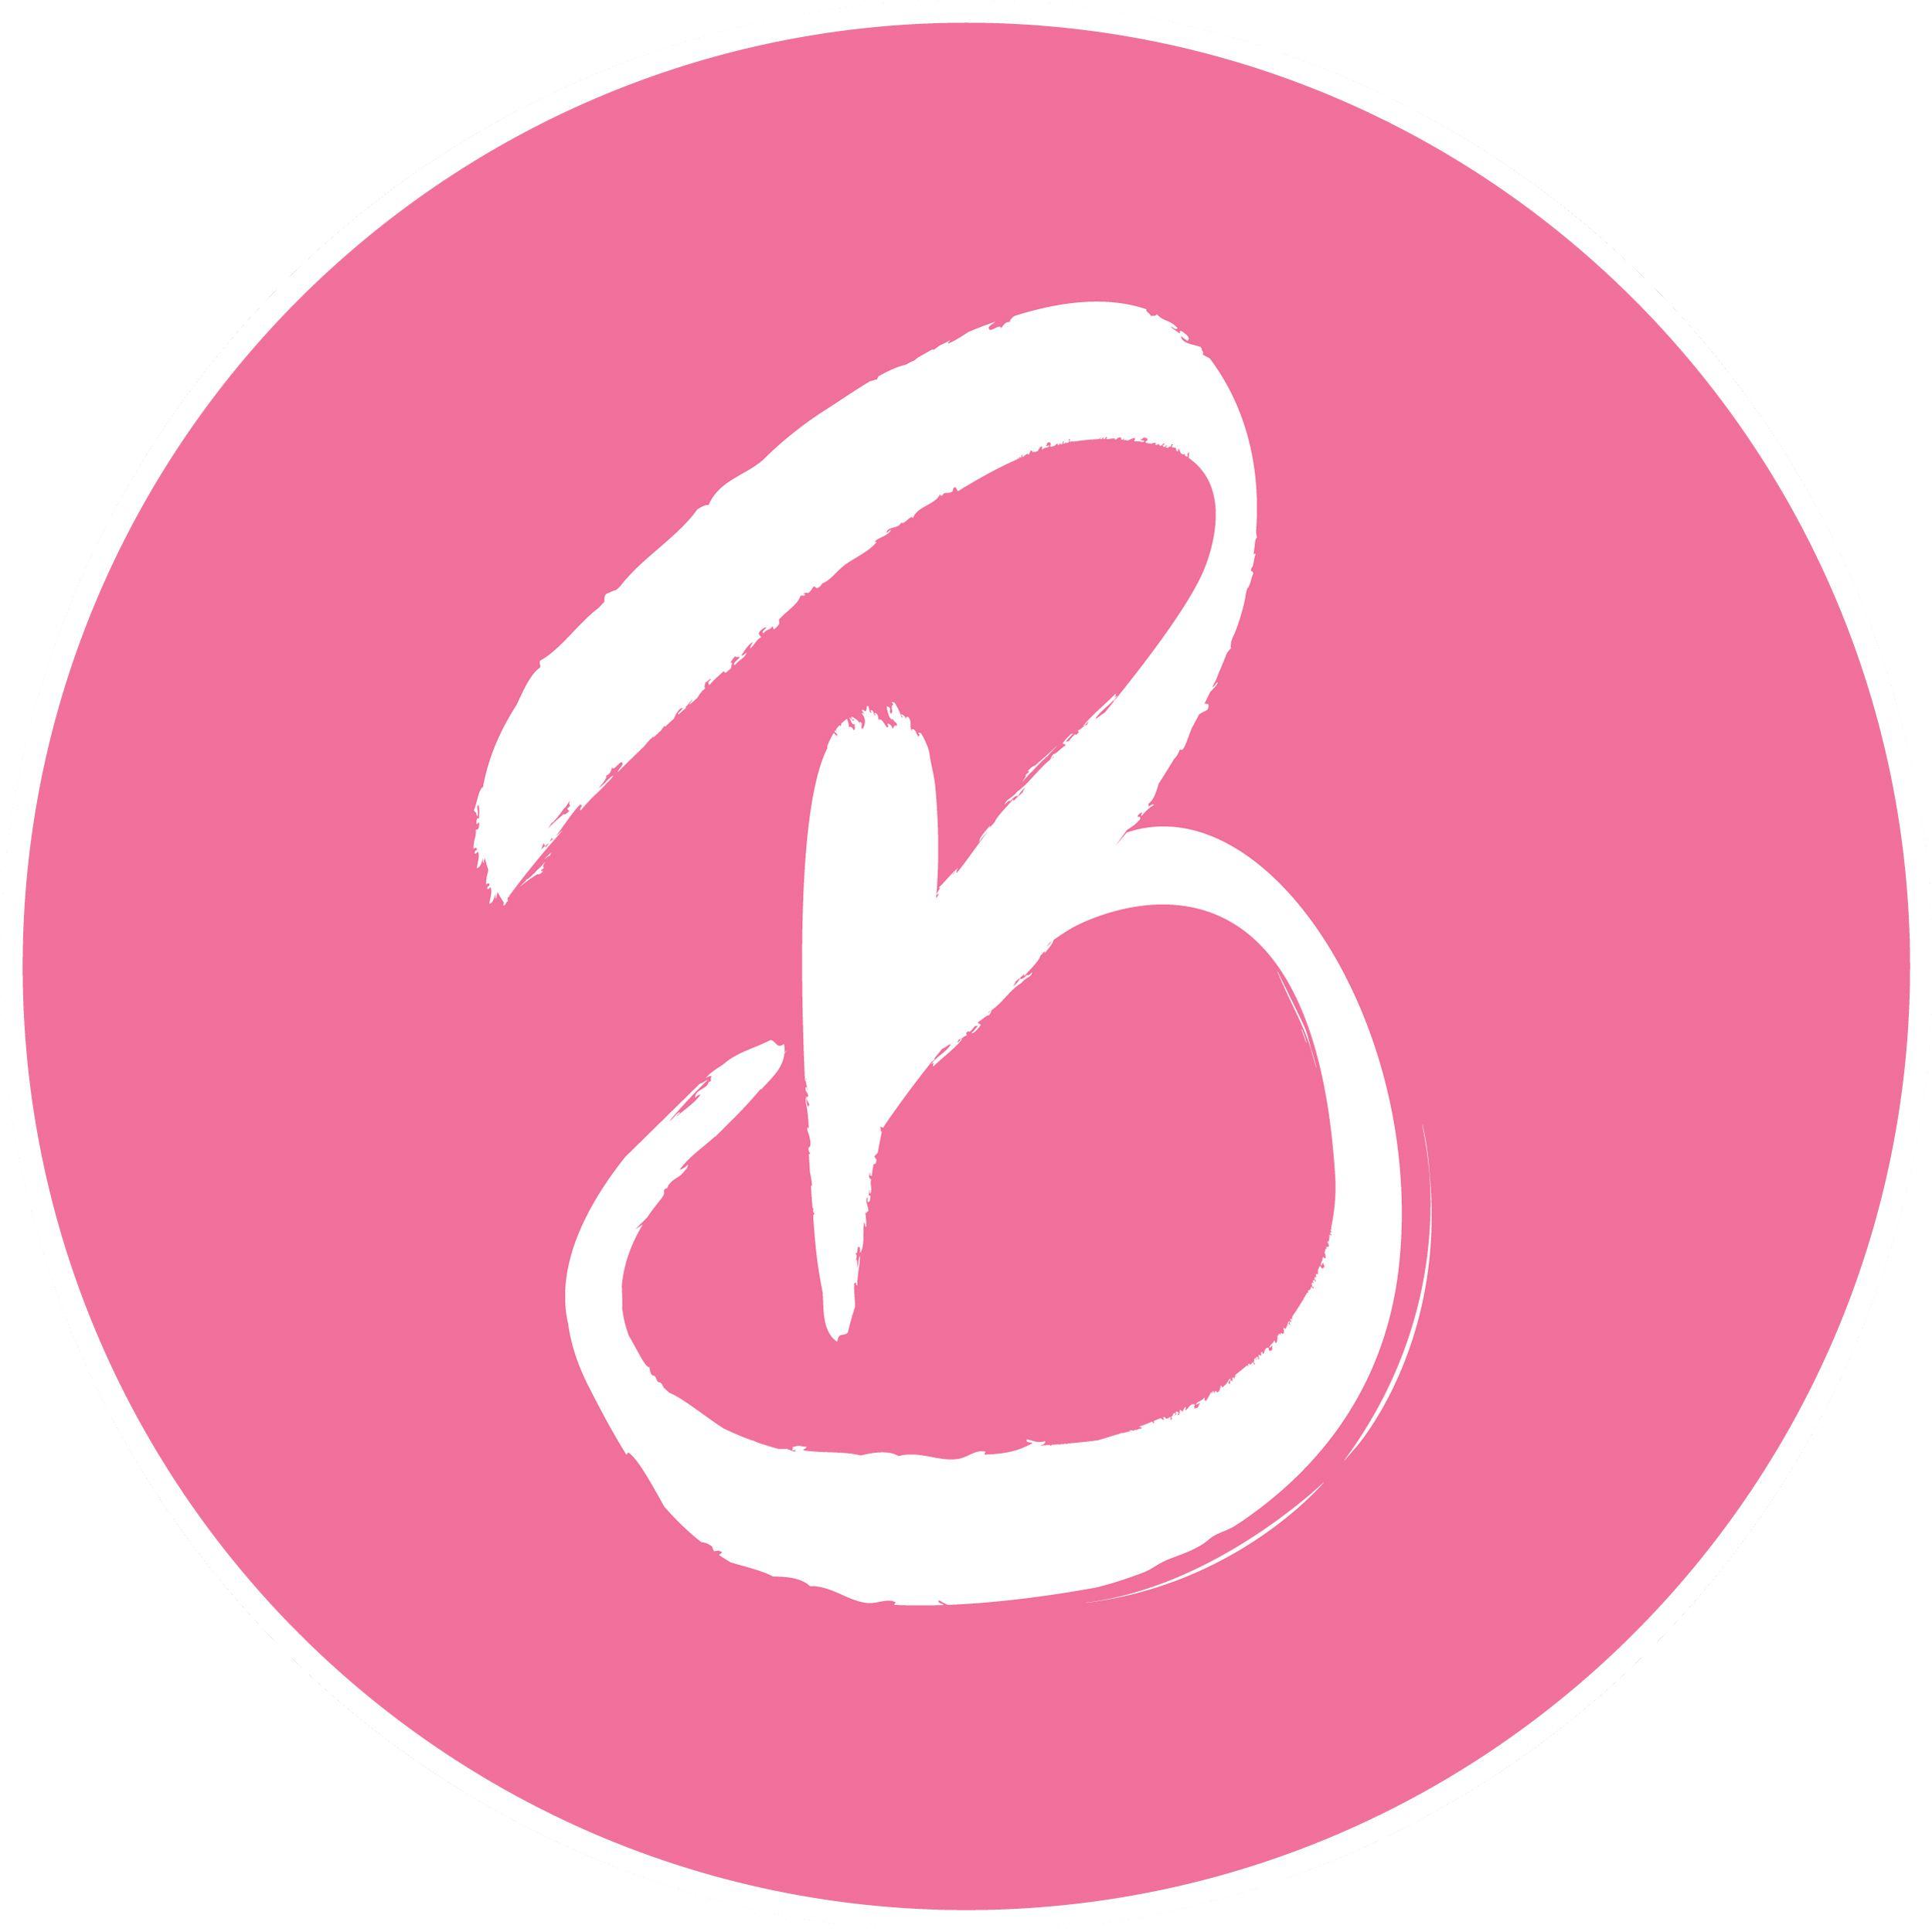 B in Circle Logo - Press & Media Bakery Bath